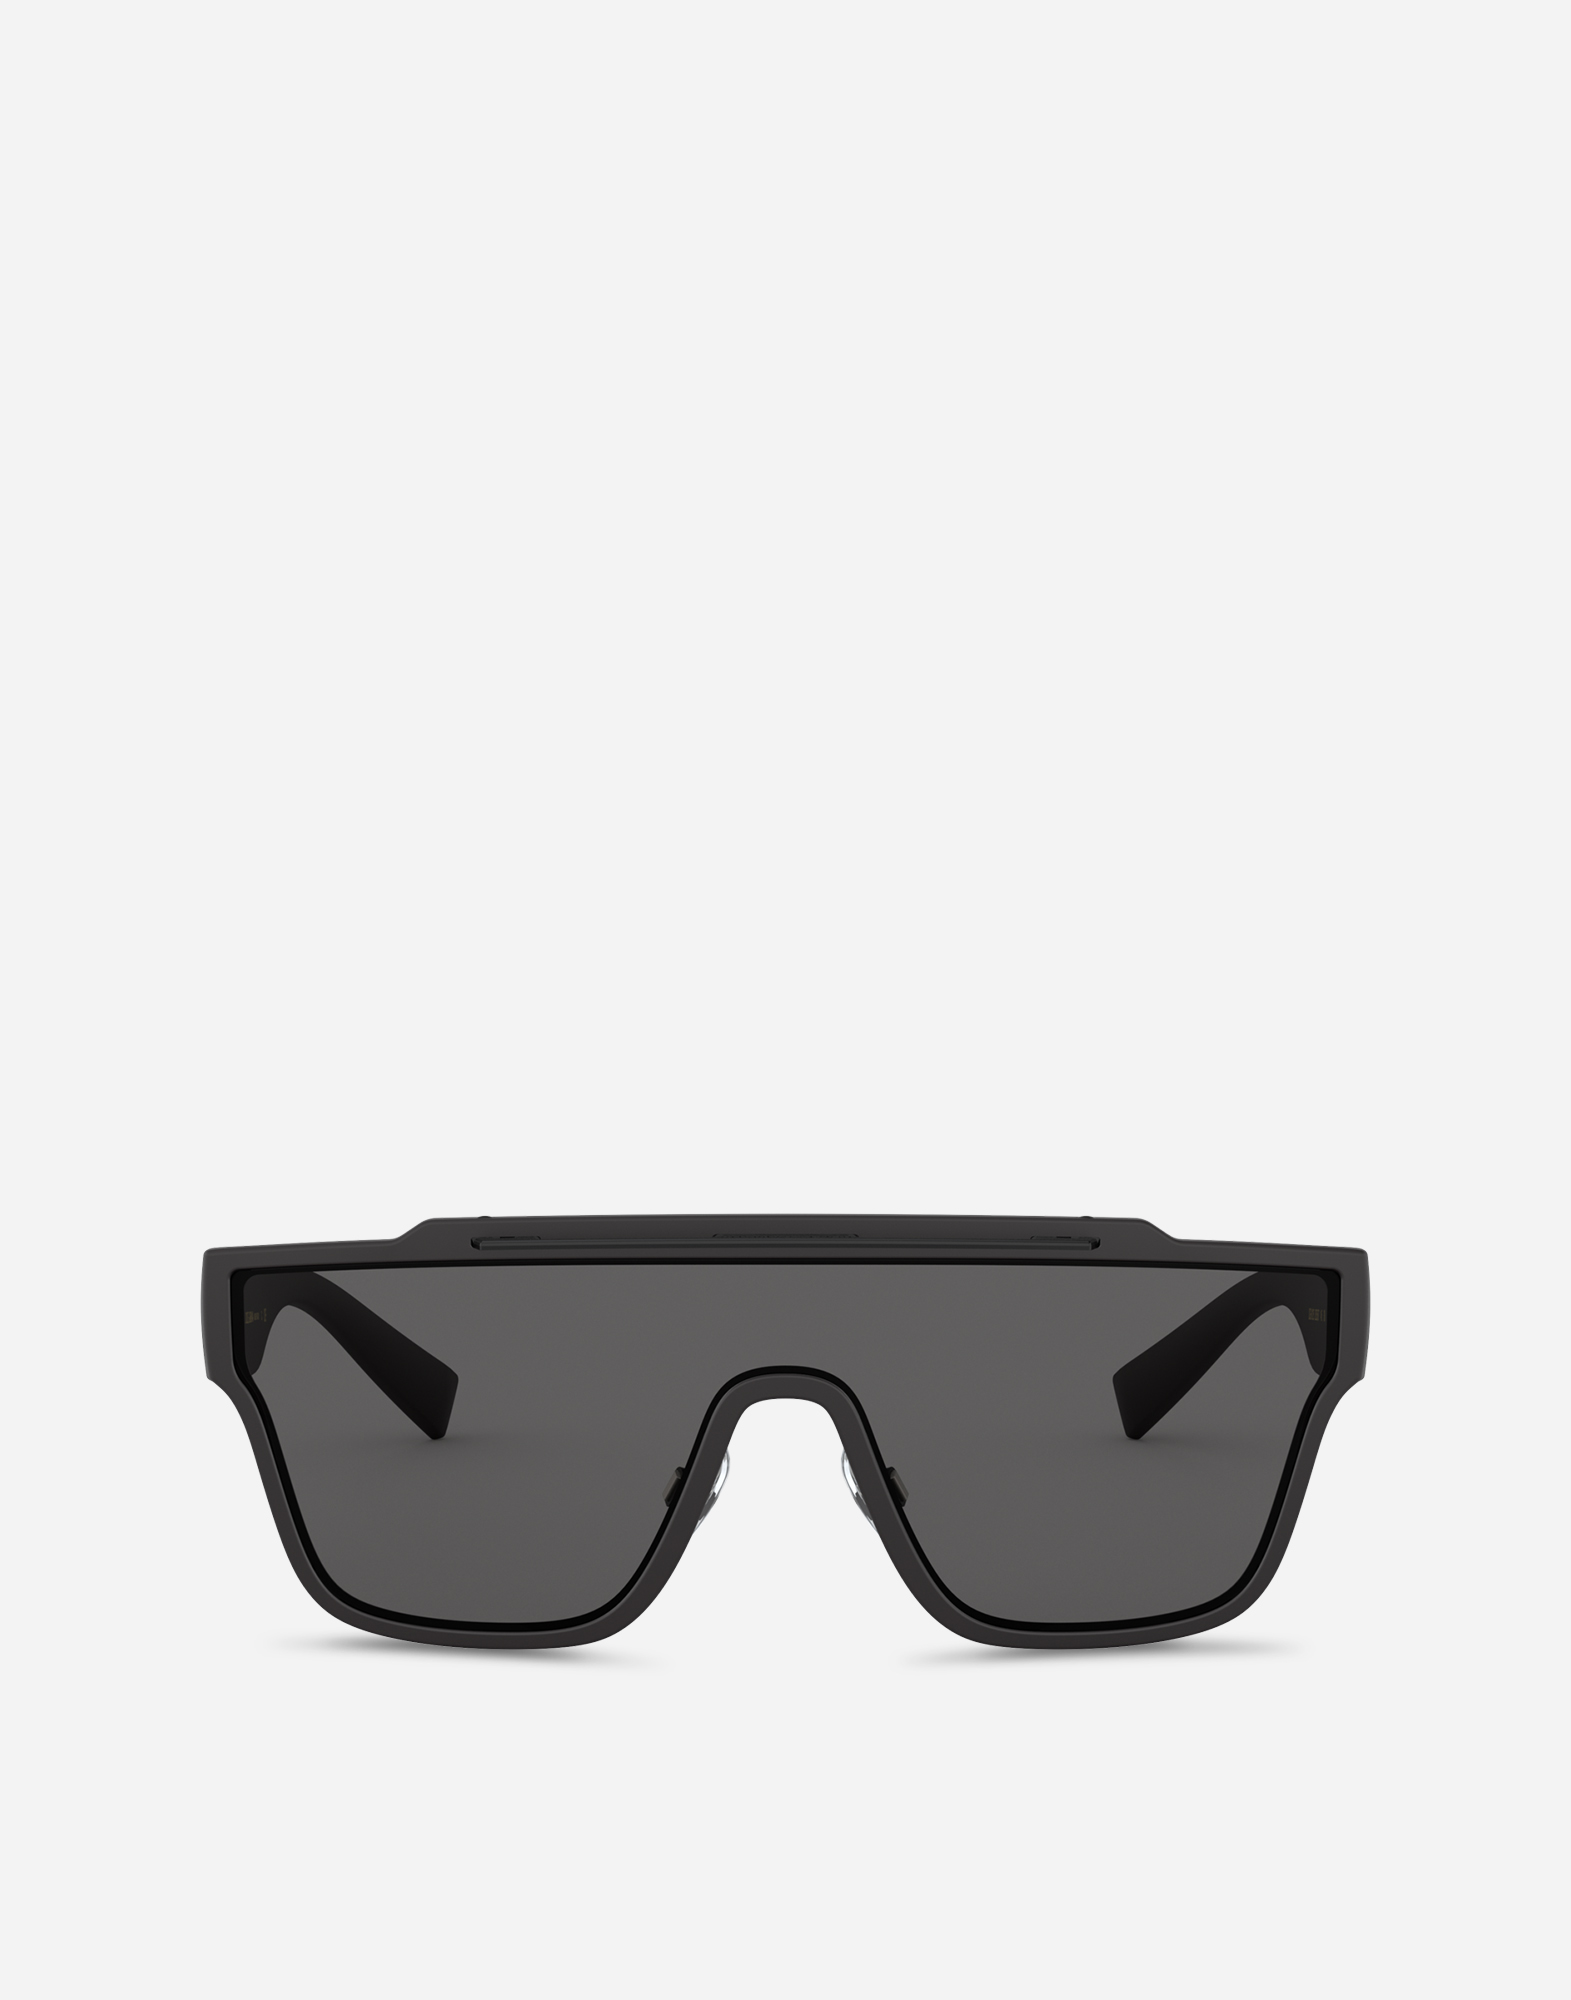 Viale Piave 20 sunglasses in Black